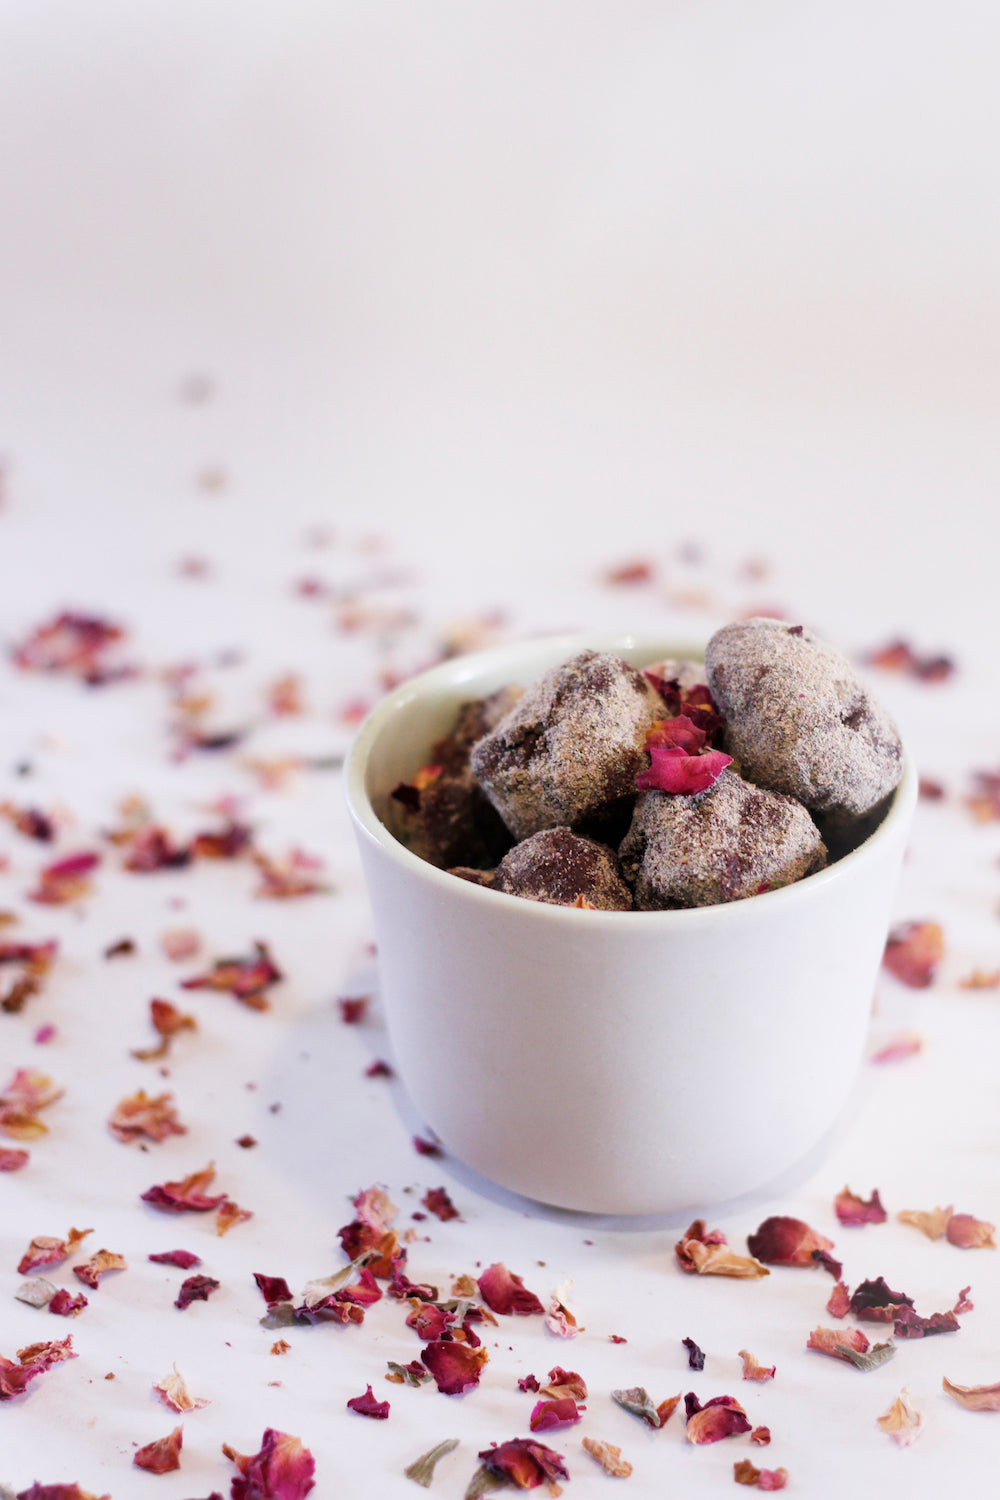 rose petal organic chocolate truffles LOTUSWEI flower essences